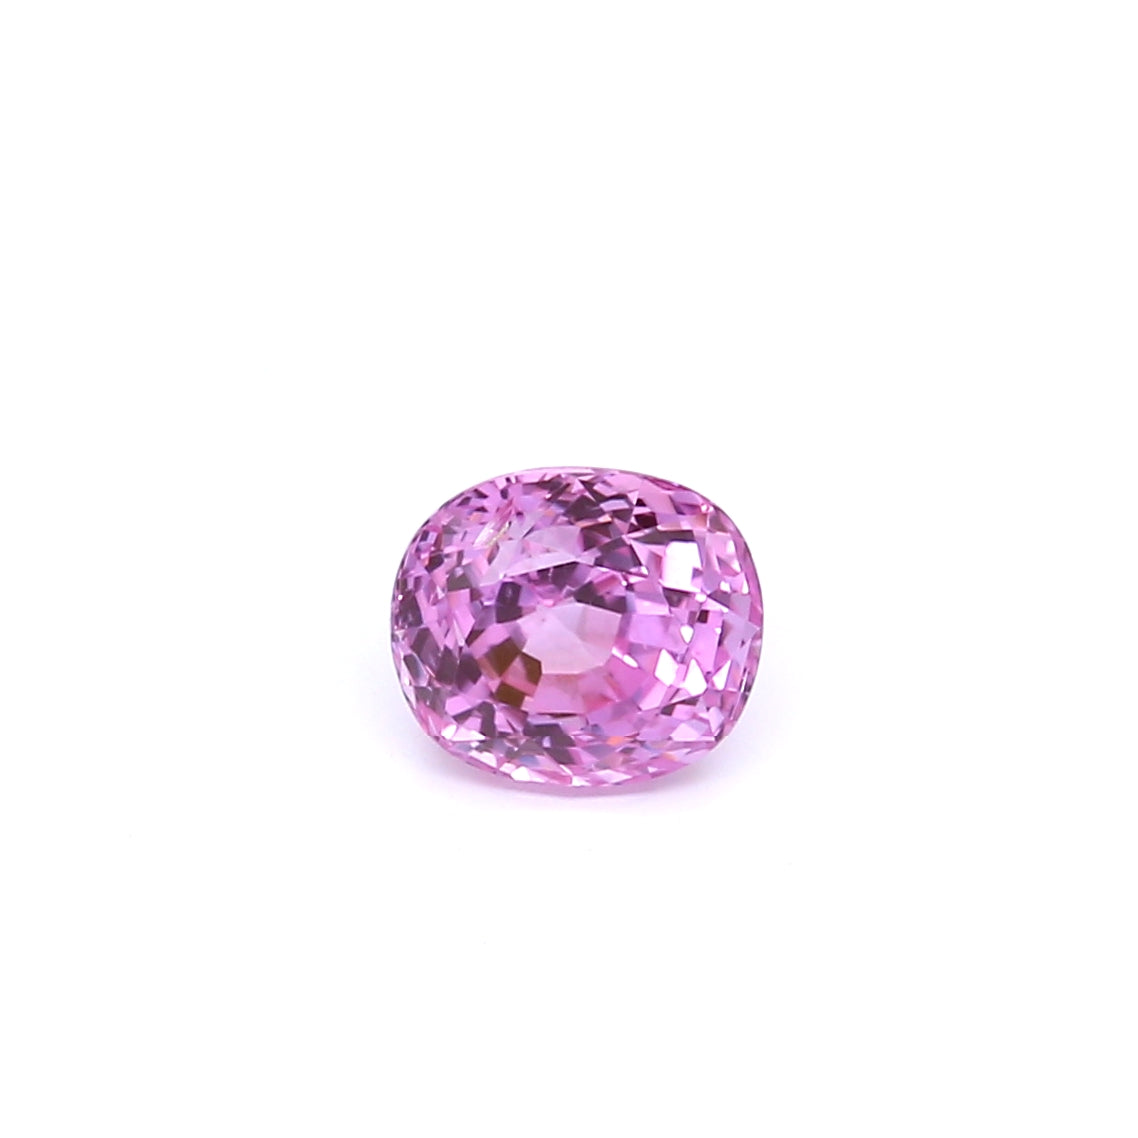 1.43ct Pink, Oval Sapphire, Heated, Madagascar - 6.26 x 5.60 x 4.74mm